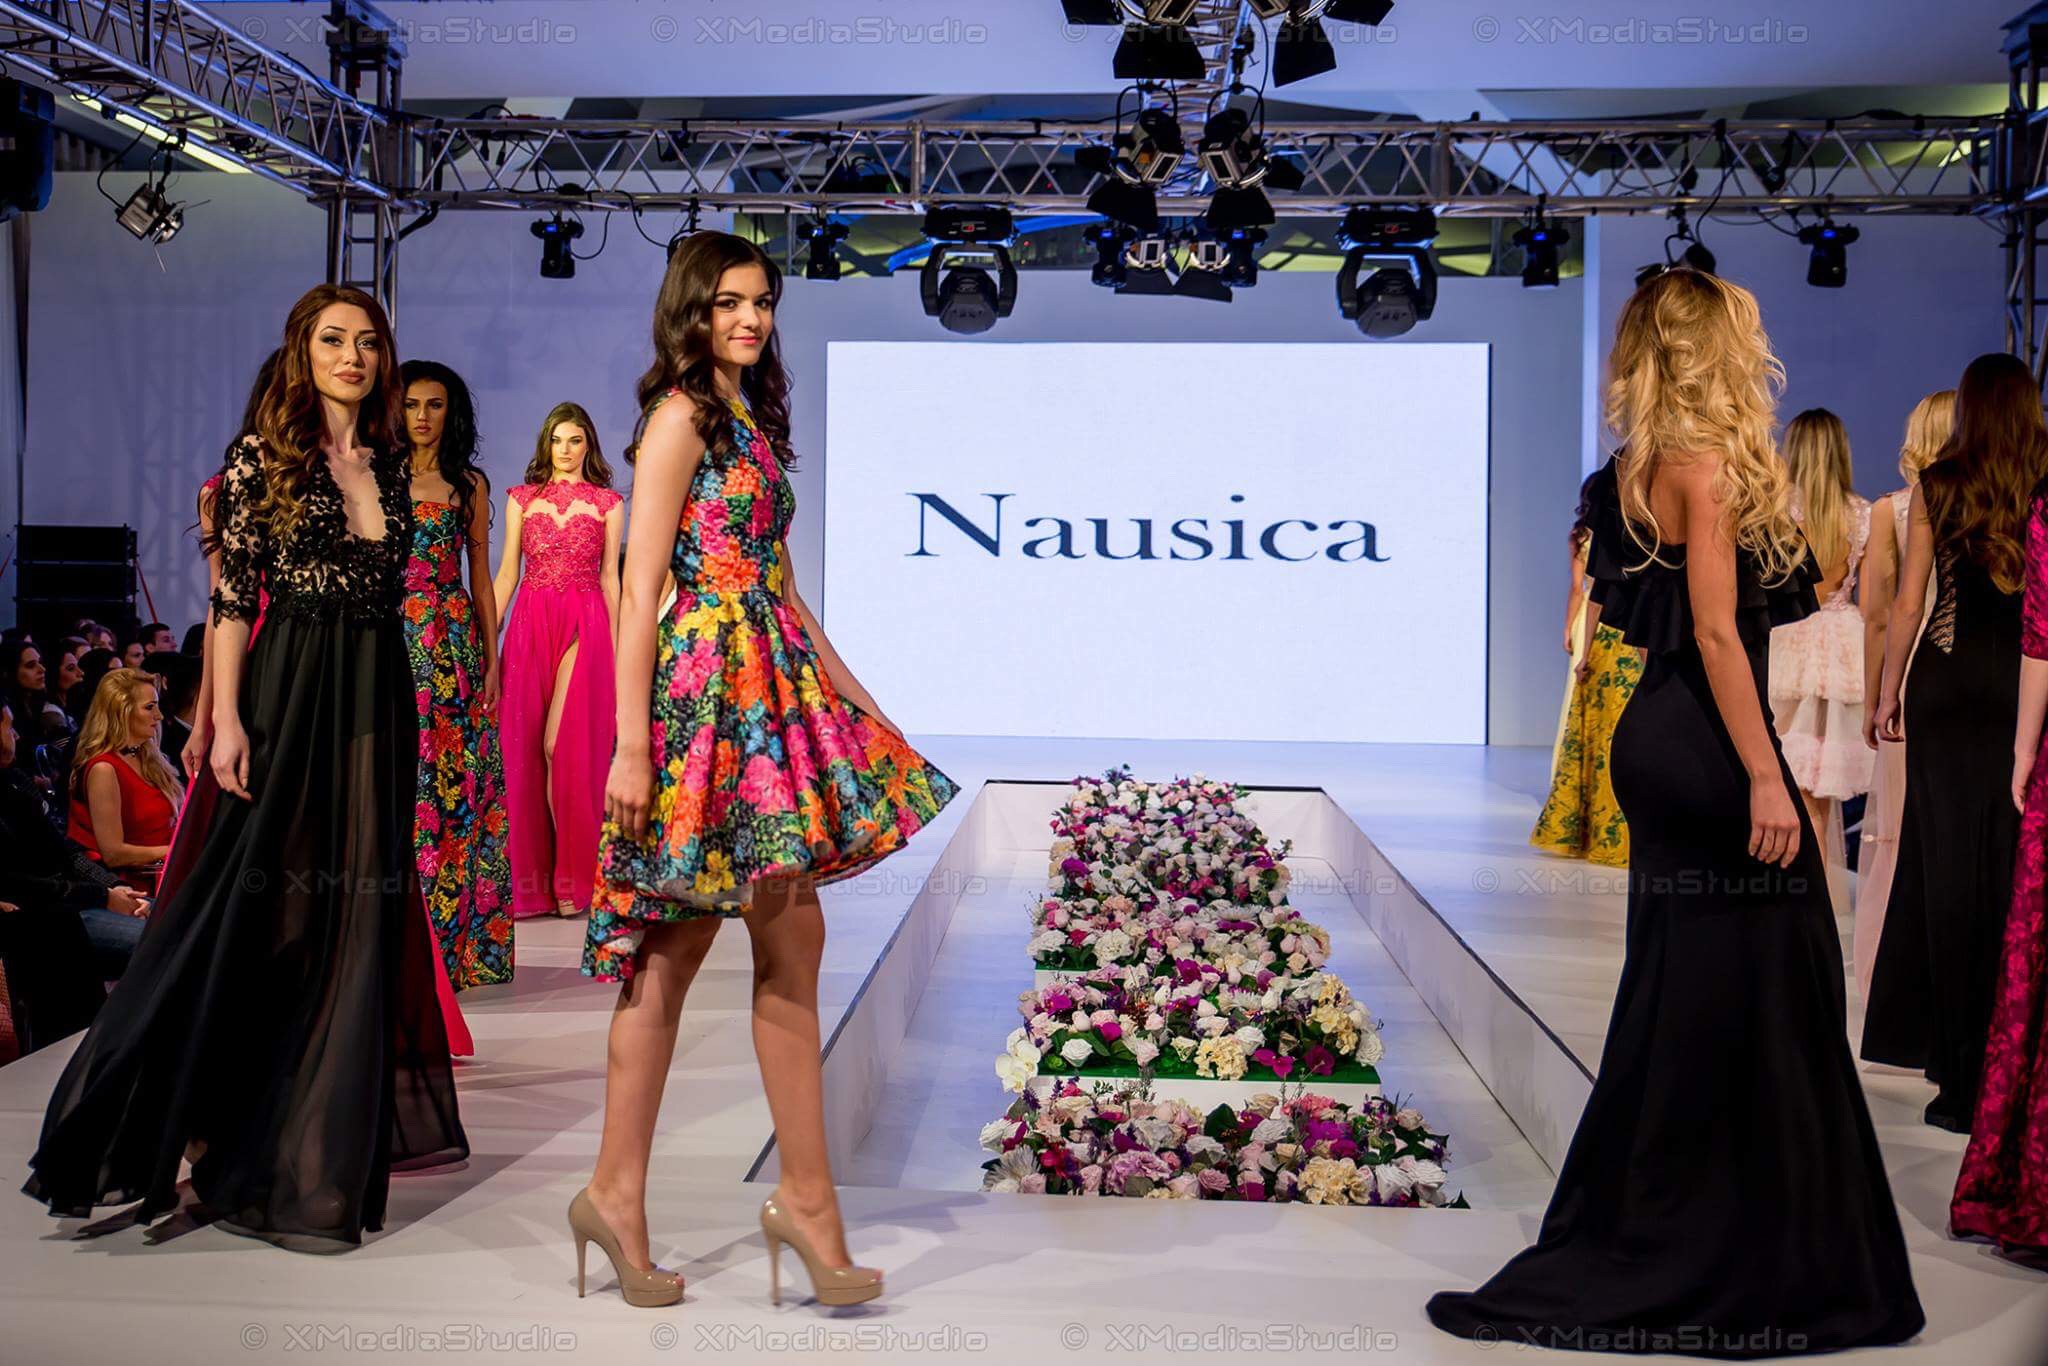 ”La vie est belle” by Nausica, cea mai apreciata colectie de la Bucharest Fashion Week !